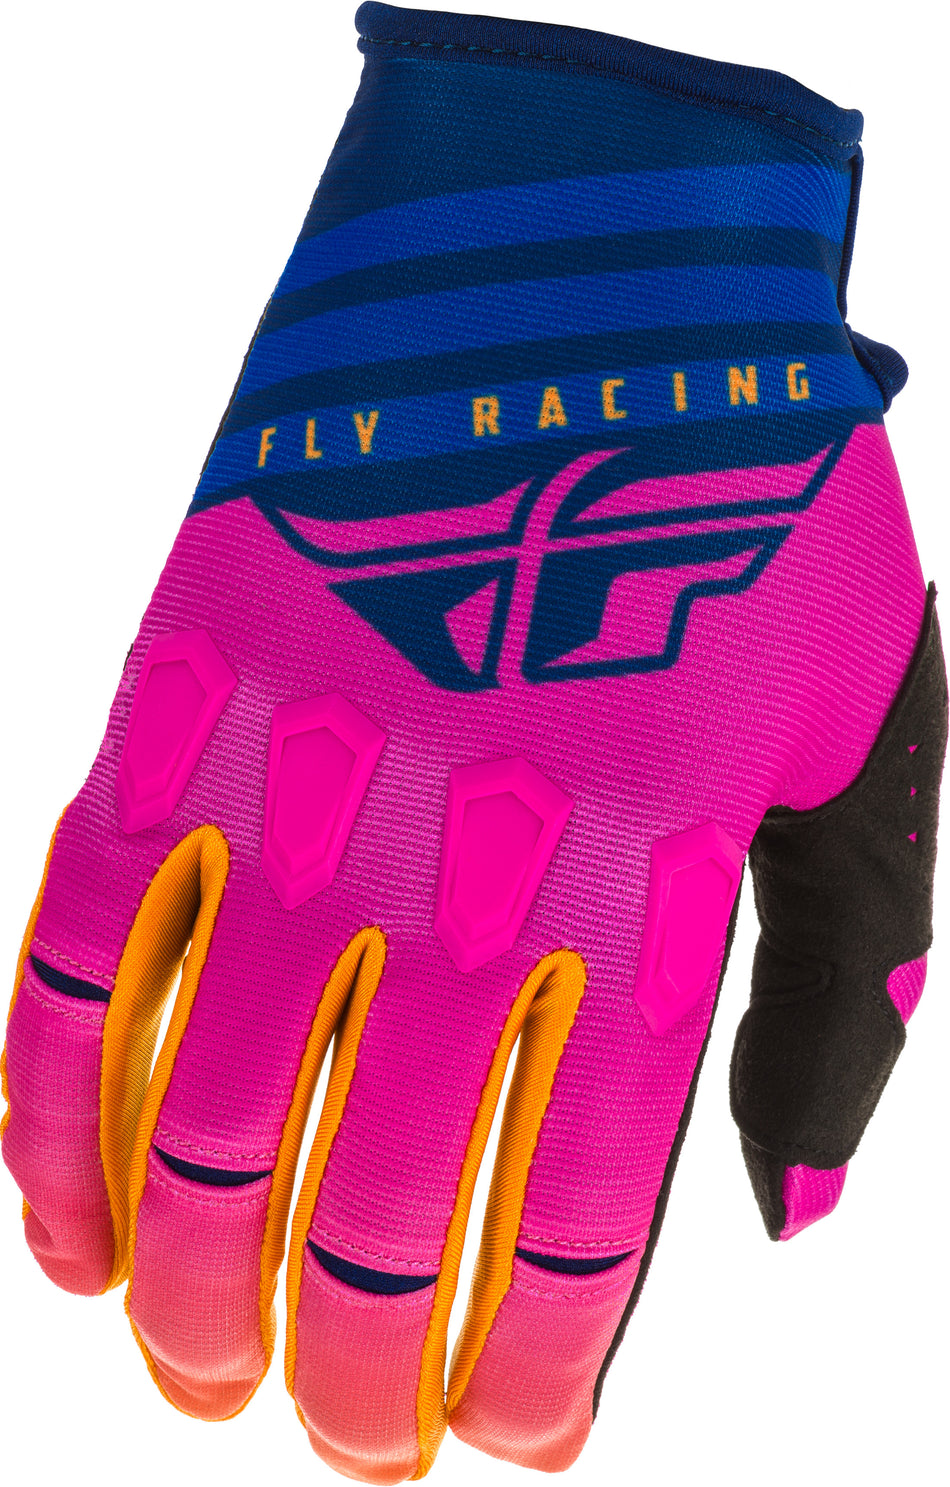 FLY RACING Kinetic K220 Gloves Midnight/Blue/Orange Sz 11 373-51911